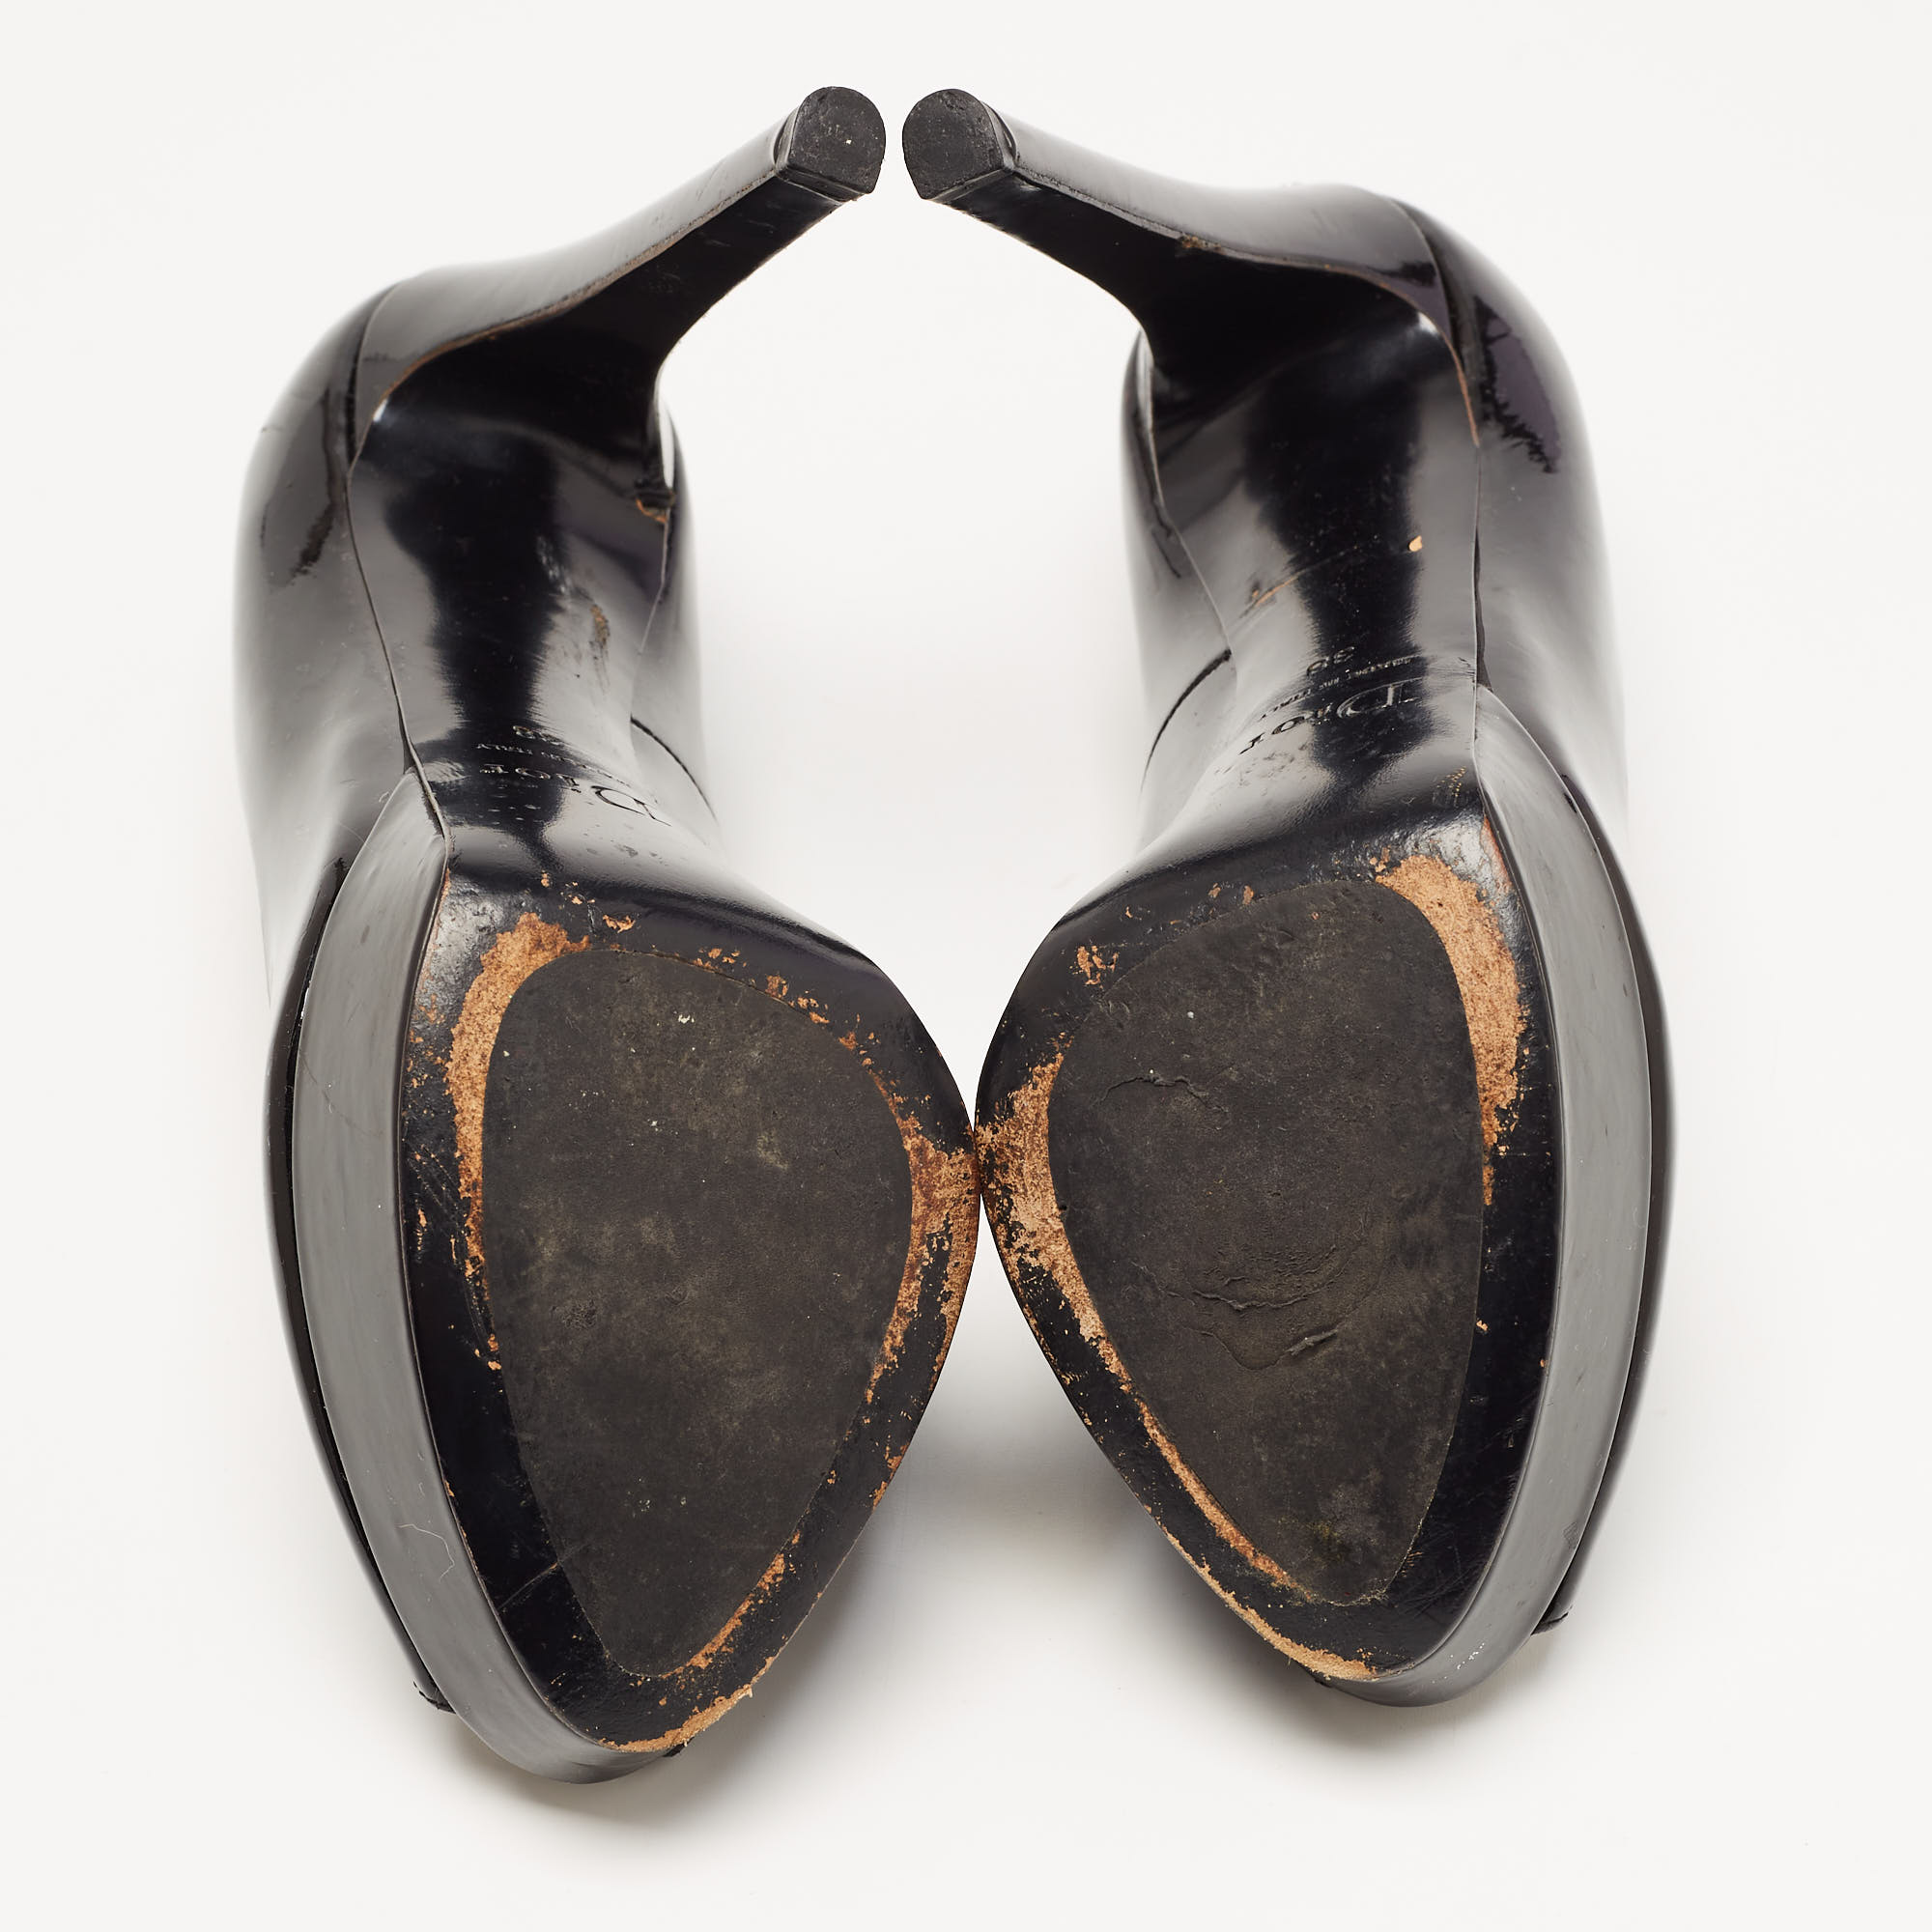 Dior Black Patent Leather Peep Toe Platform Pumps Size 38